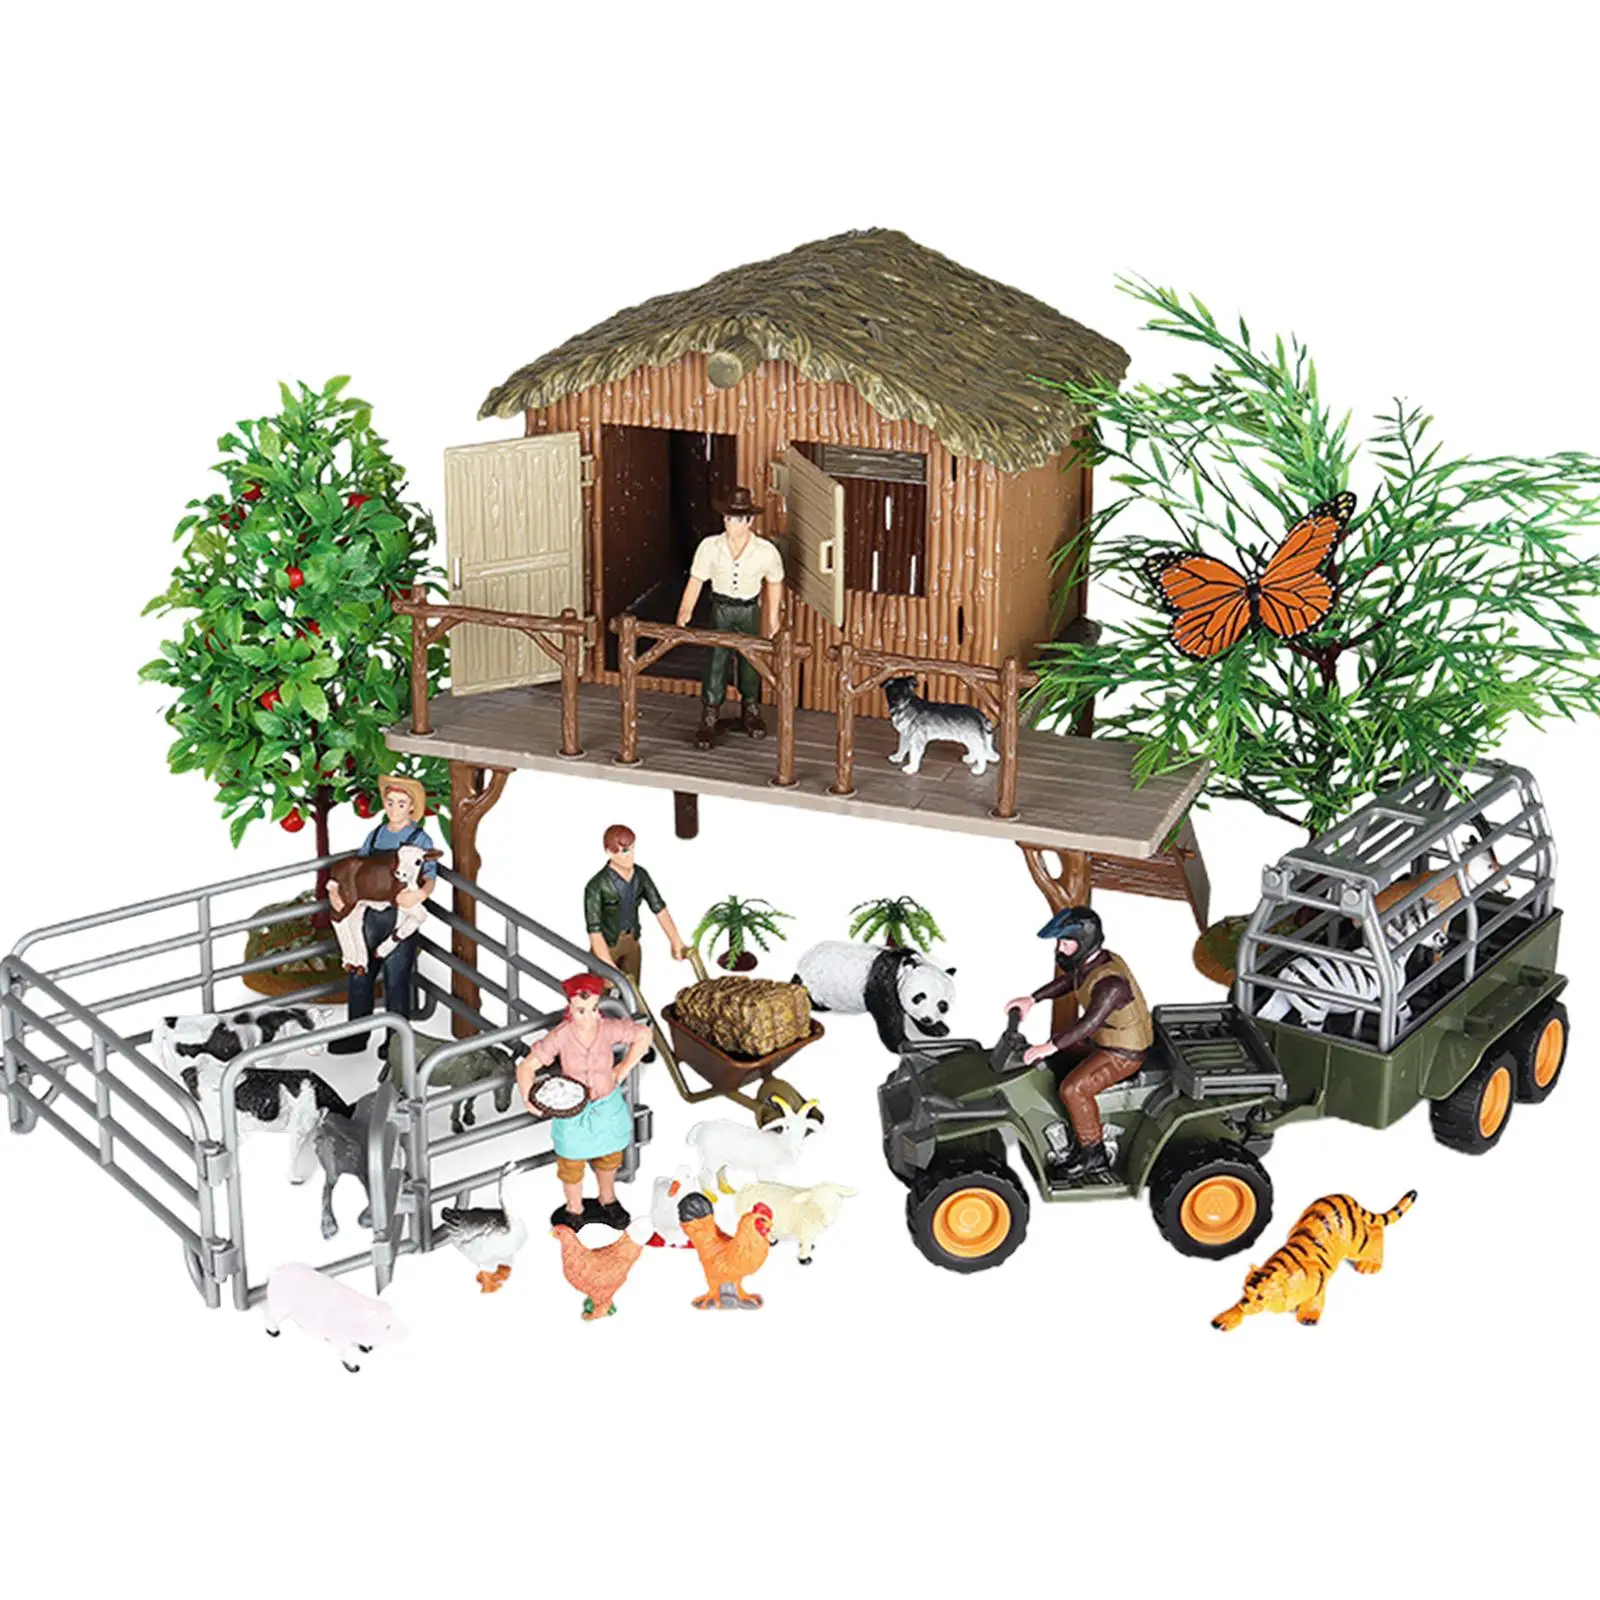 

Realistic Farm House Model Figures Playset Figurines School Project Farmhouse Miniature Barn Toy Set for Kids Children